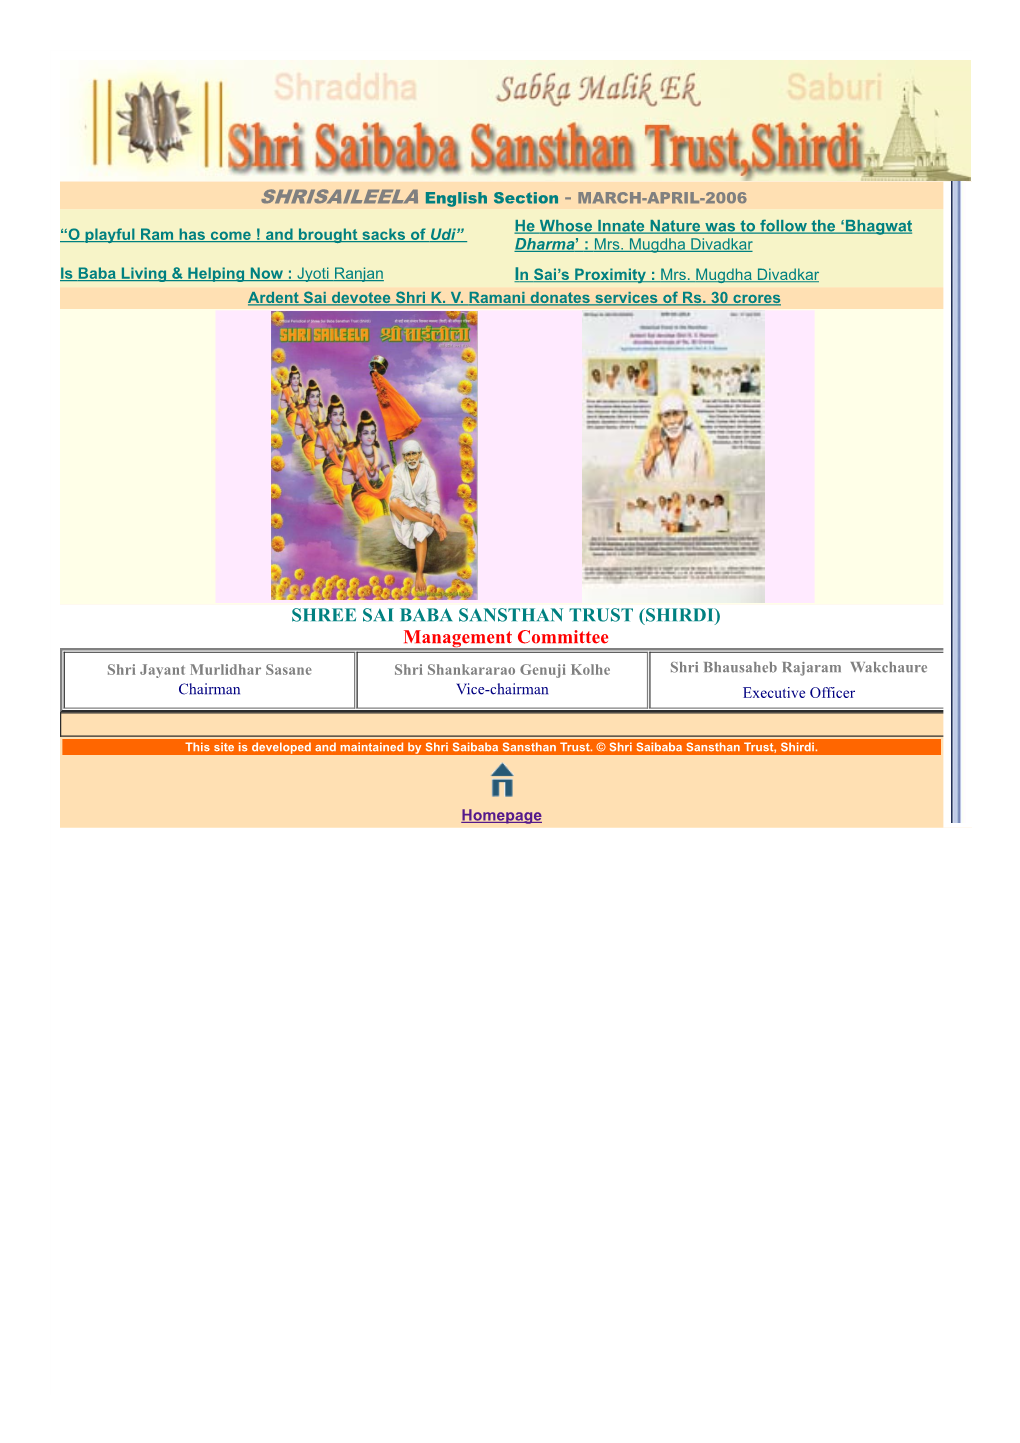 Shree Sai Baba Sansthan Trust (Shirdi)